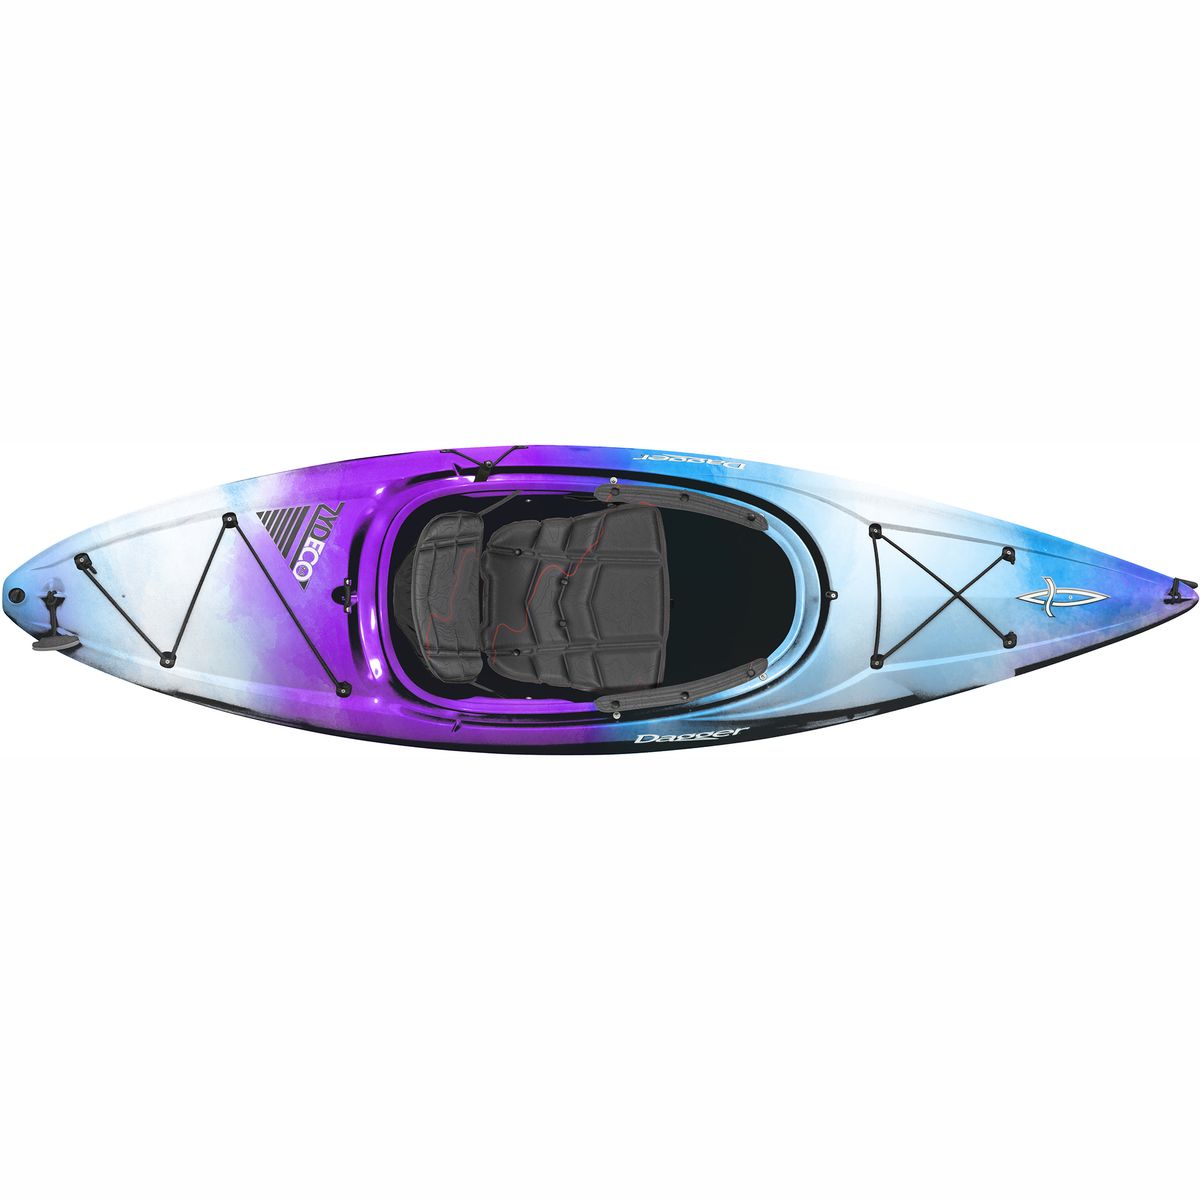 Color:Freeze:Dagger Zydeco 9.0 Kayak